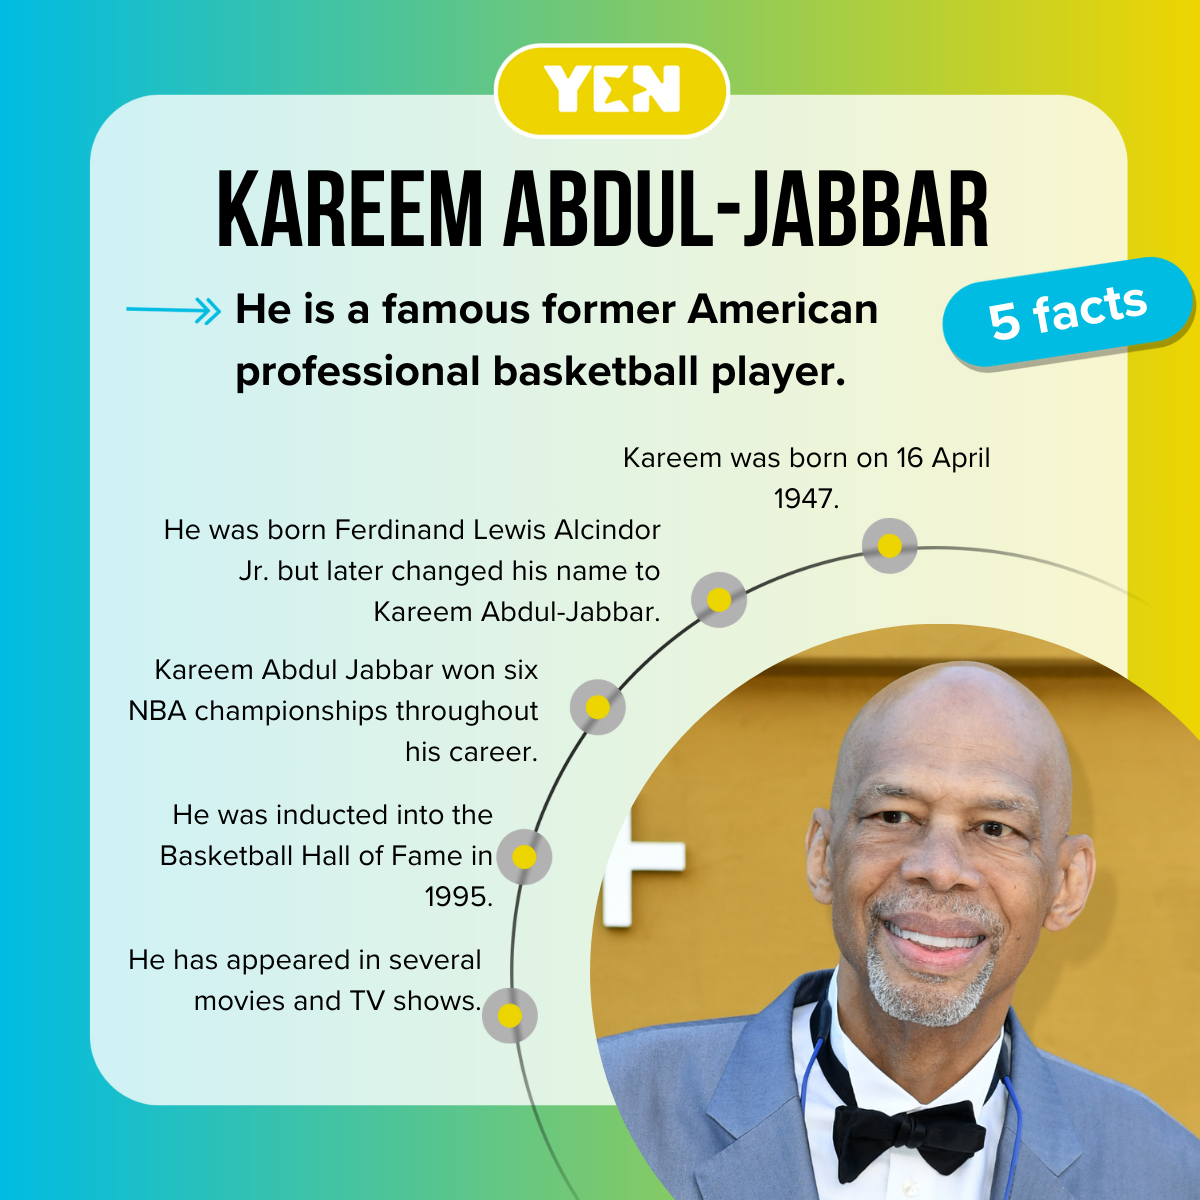 5 facts about Kareem Abdul-Jabbar